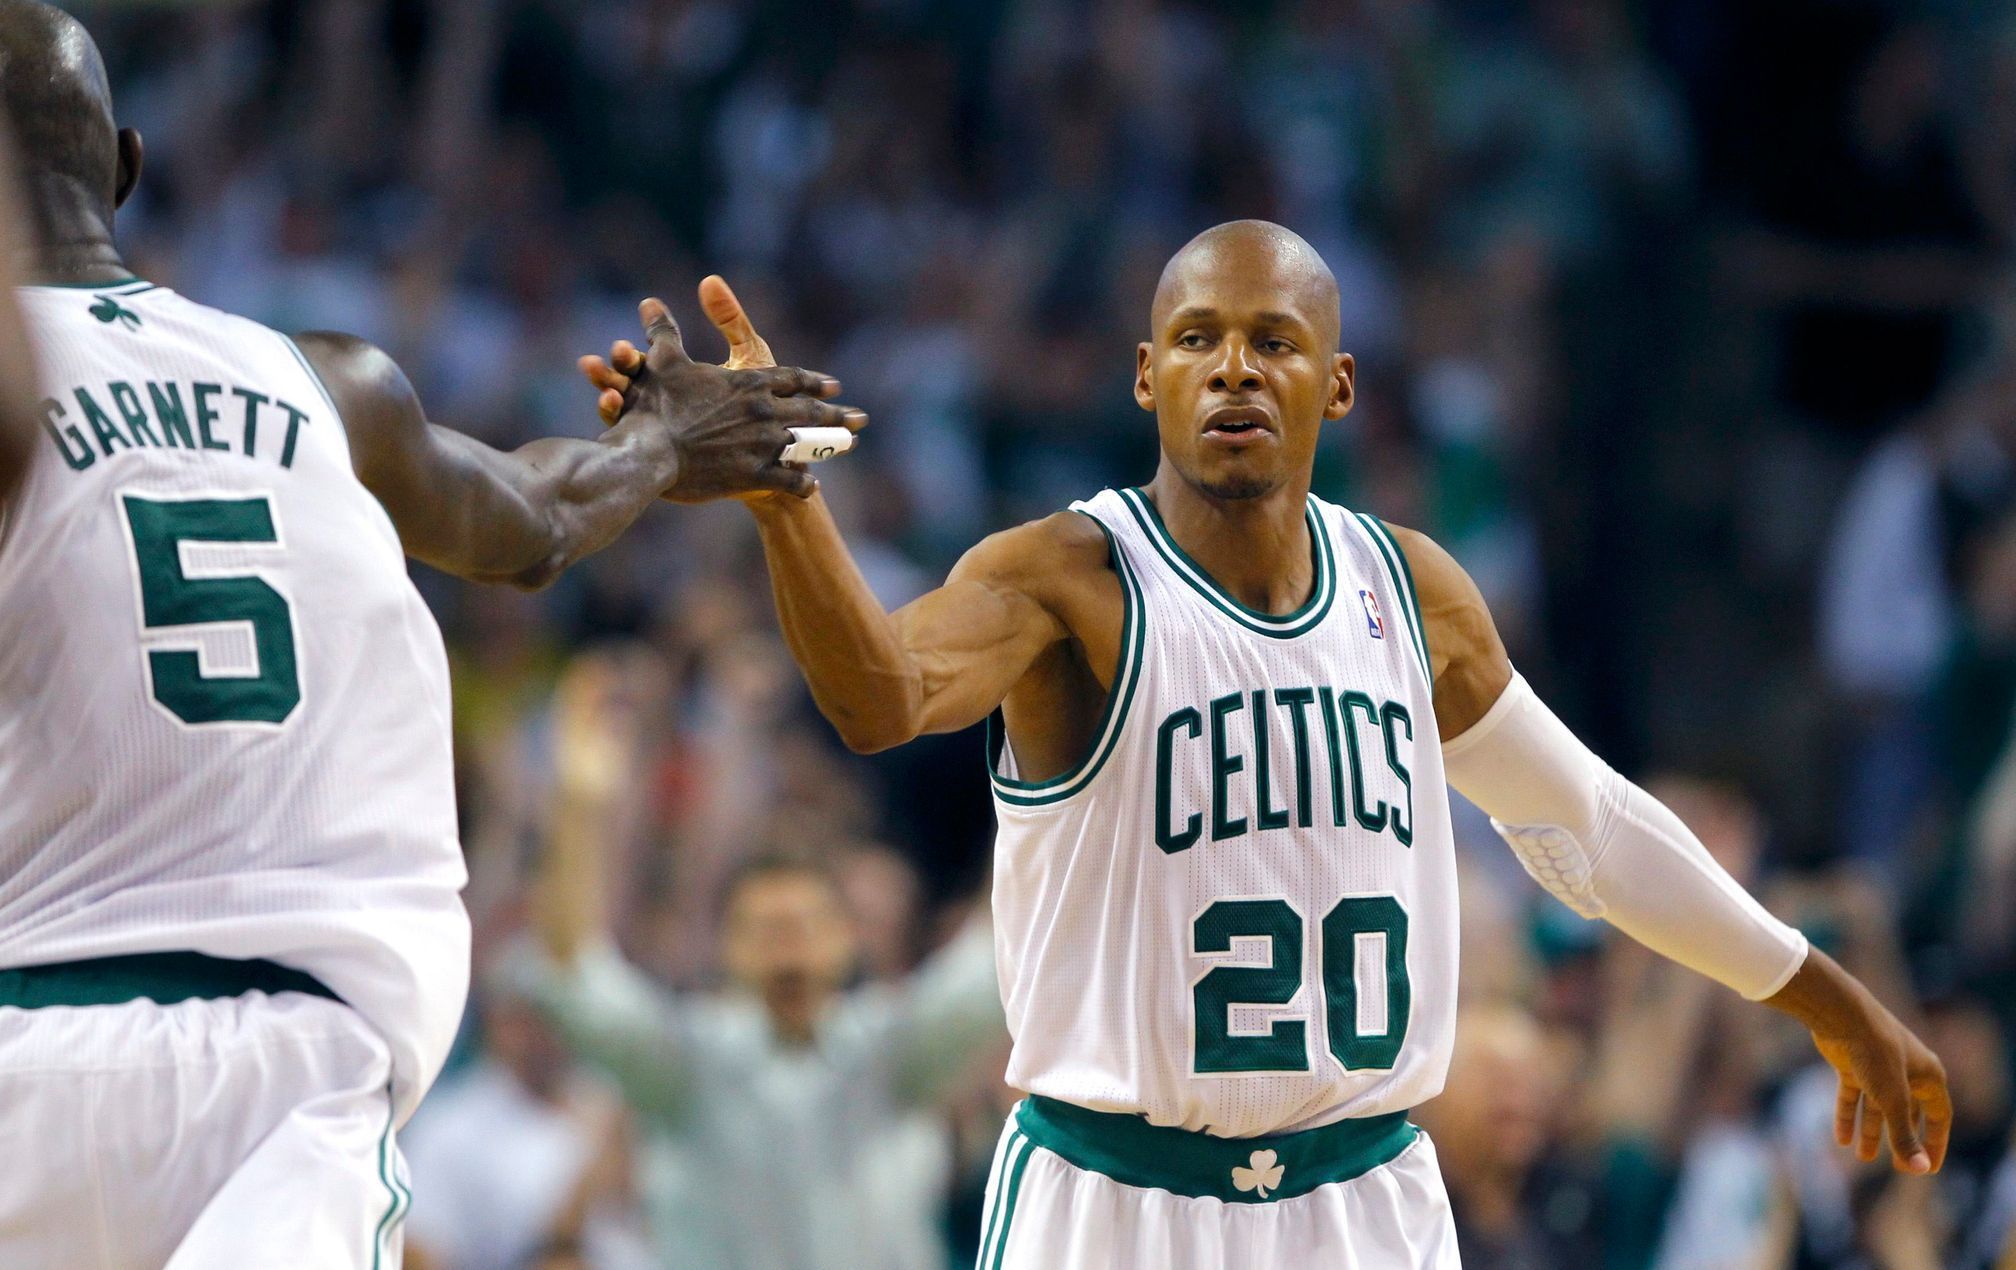 Boston Celtics (Garnett, Allen)